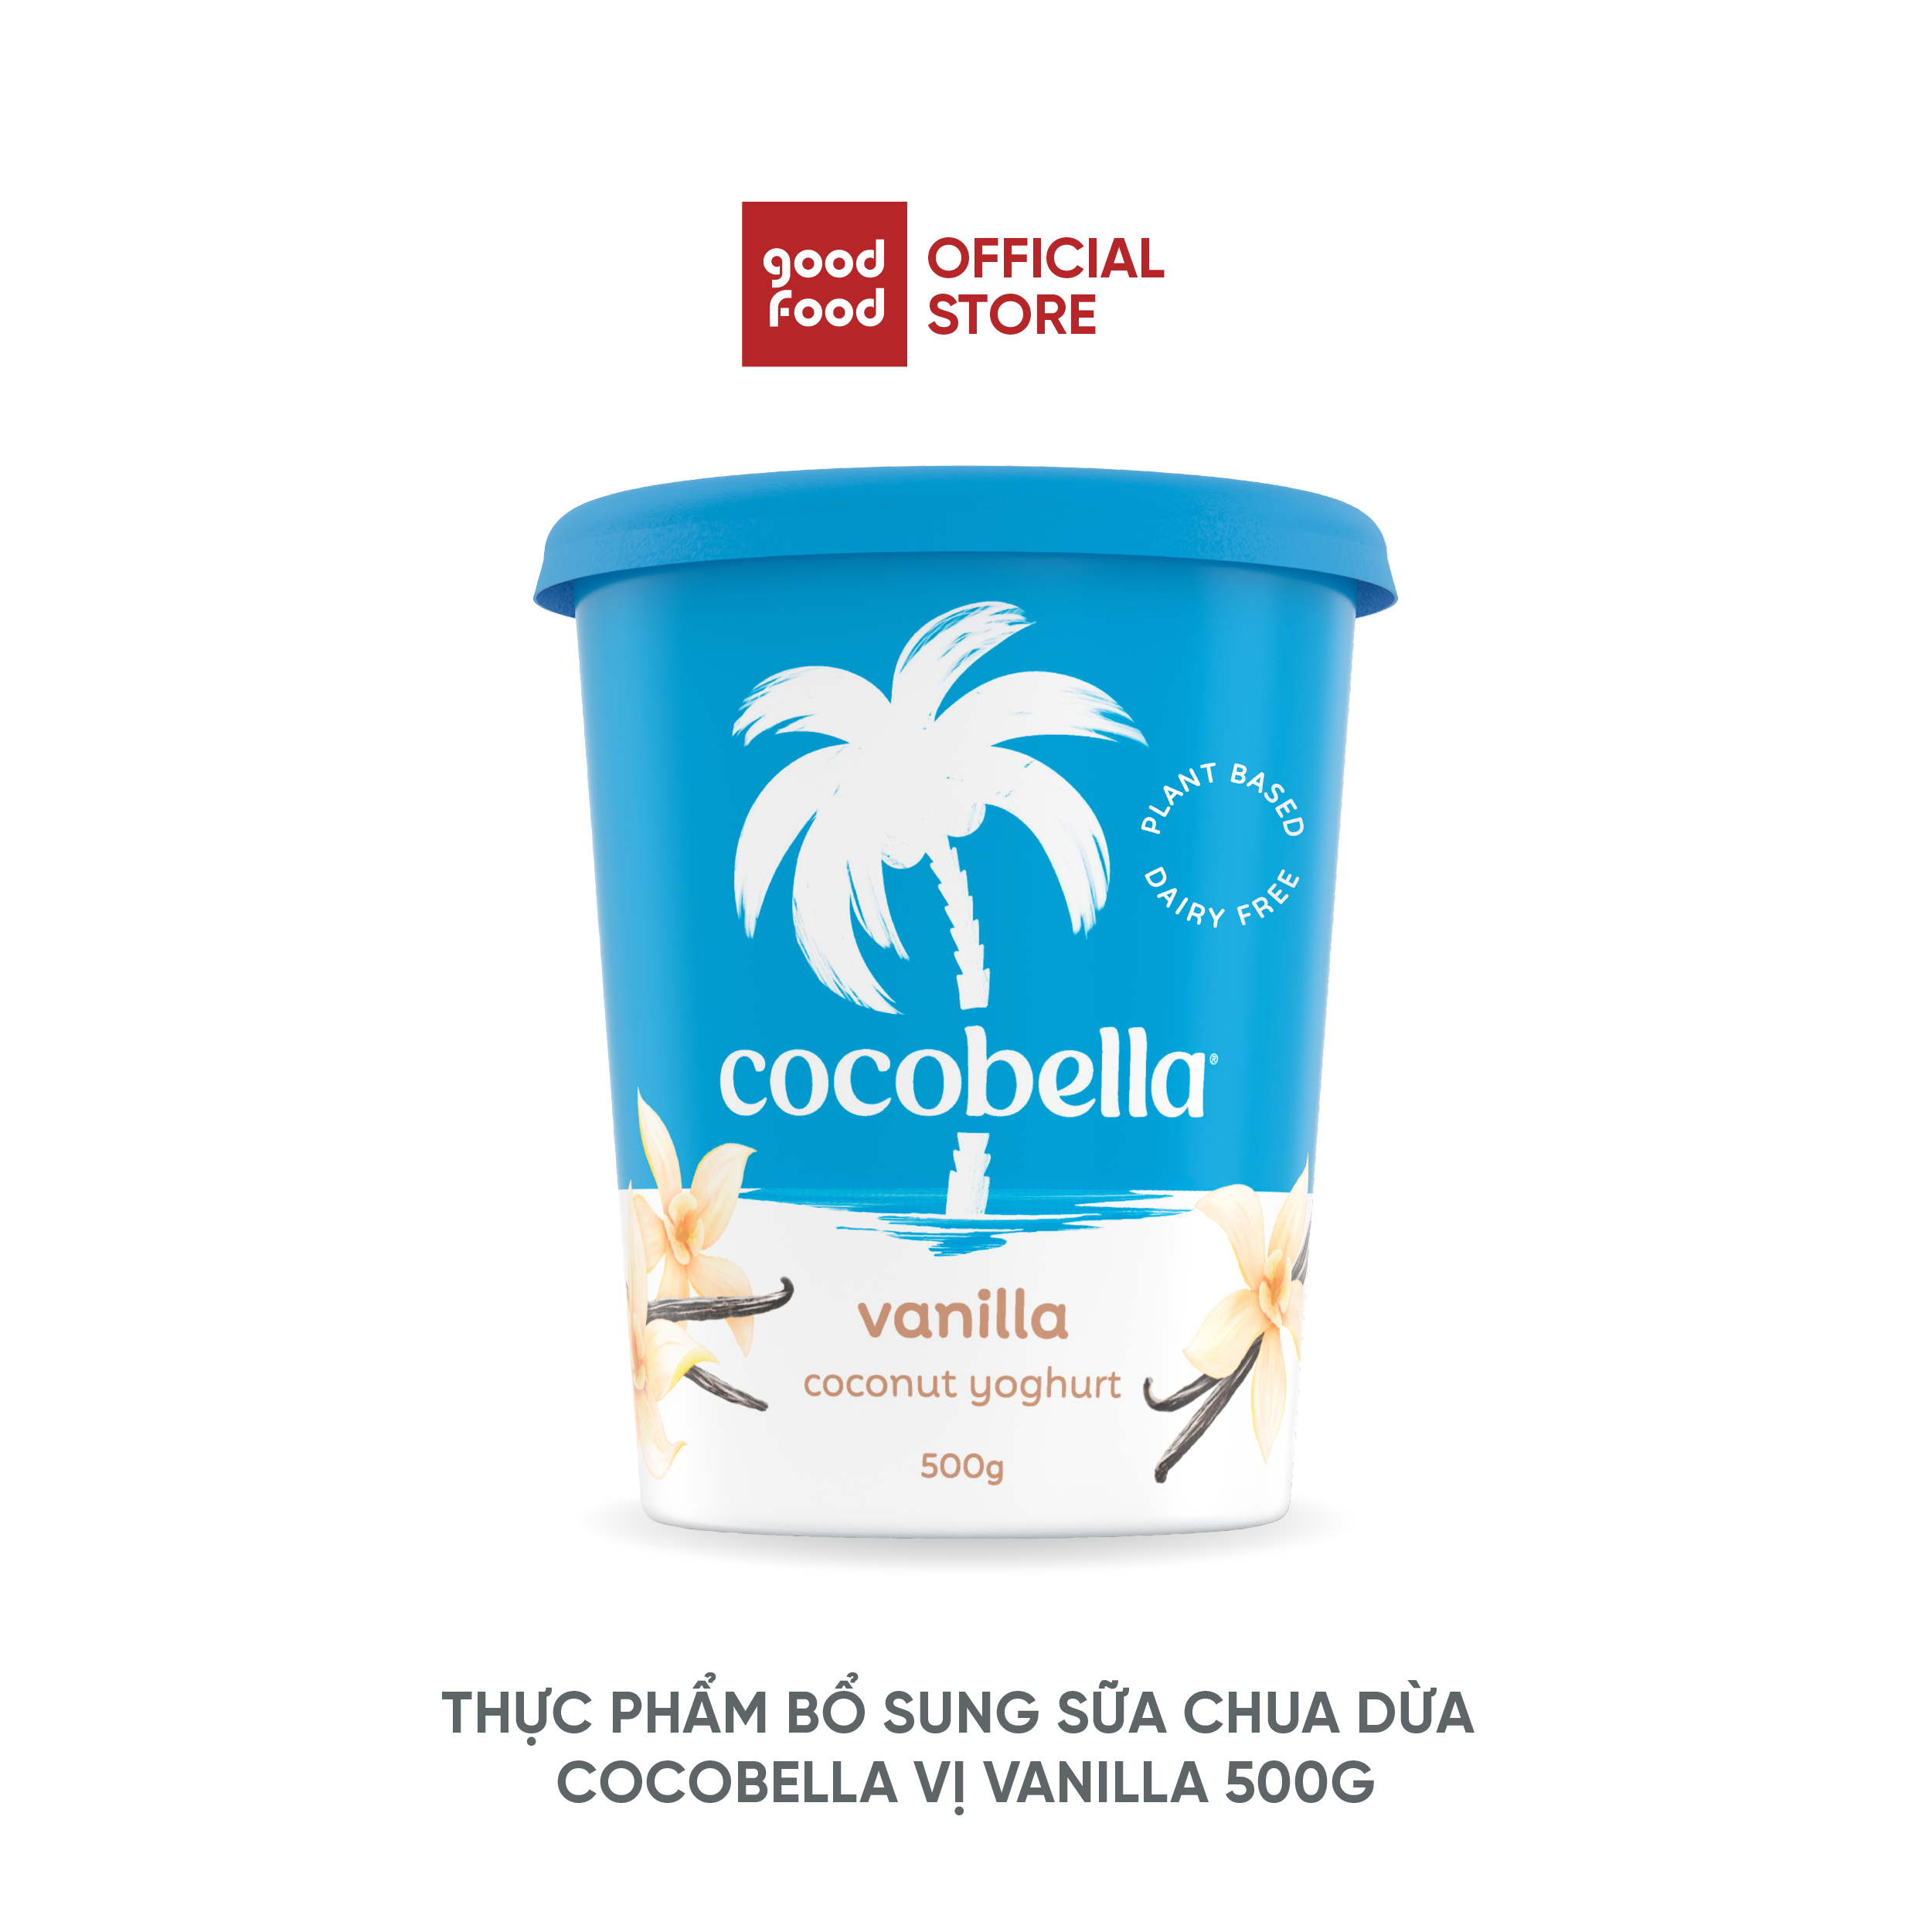 Thực Phẩm Bổ Sung Sữa Chua Dừa Cocobella vị vanilla 500G - 1 hũ